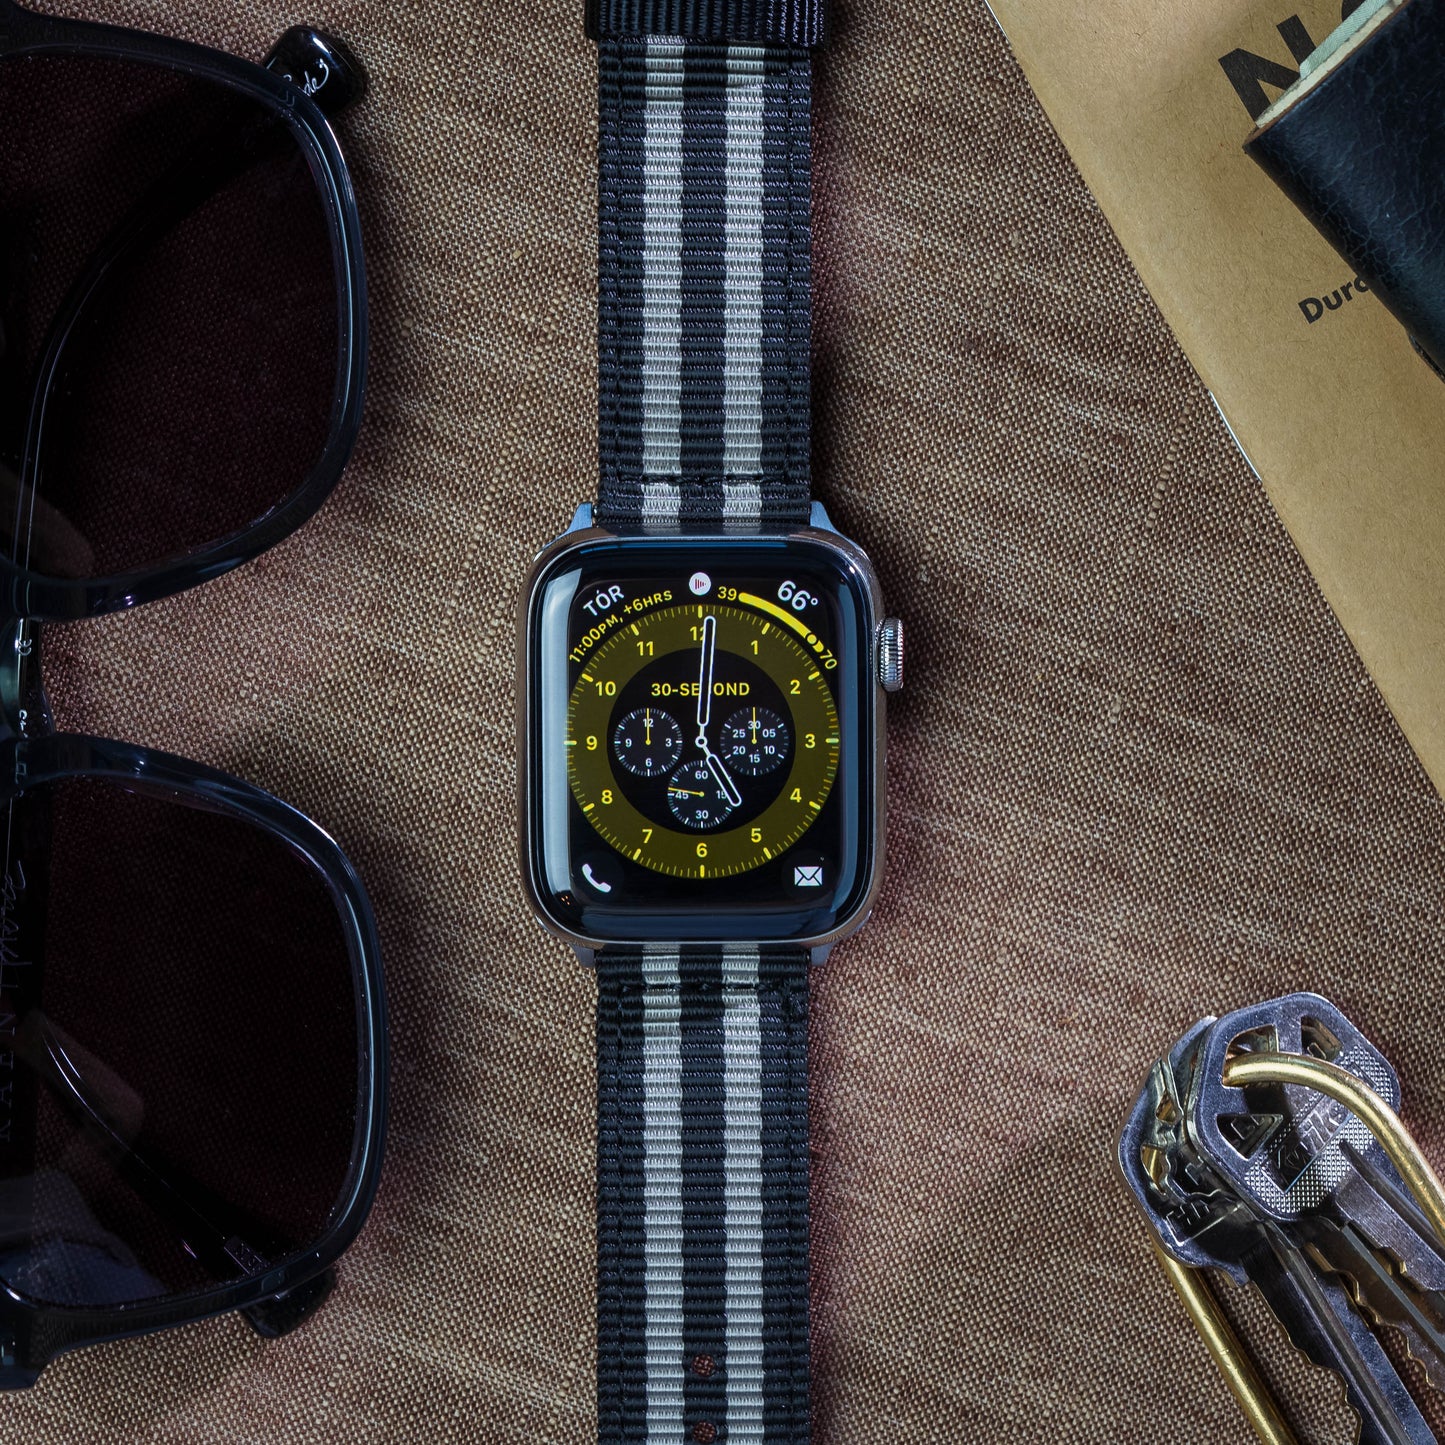 Apple Watch | Two-piece NATO Style | Smoke & Black Bond - Barton Watch Bands